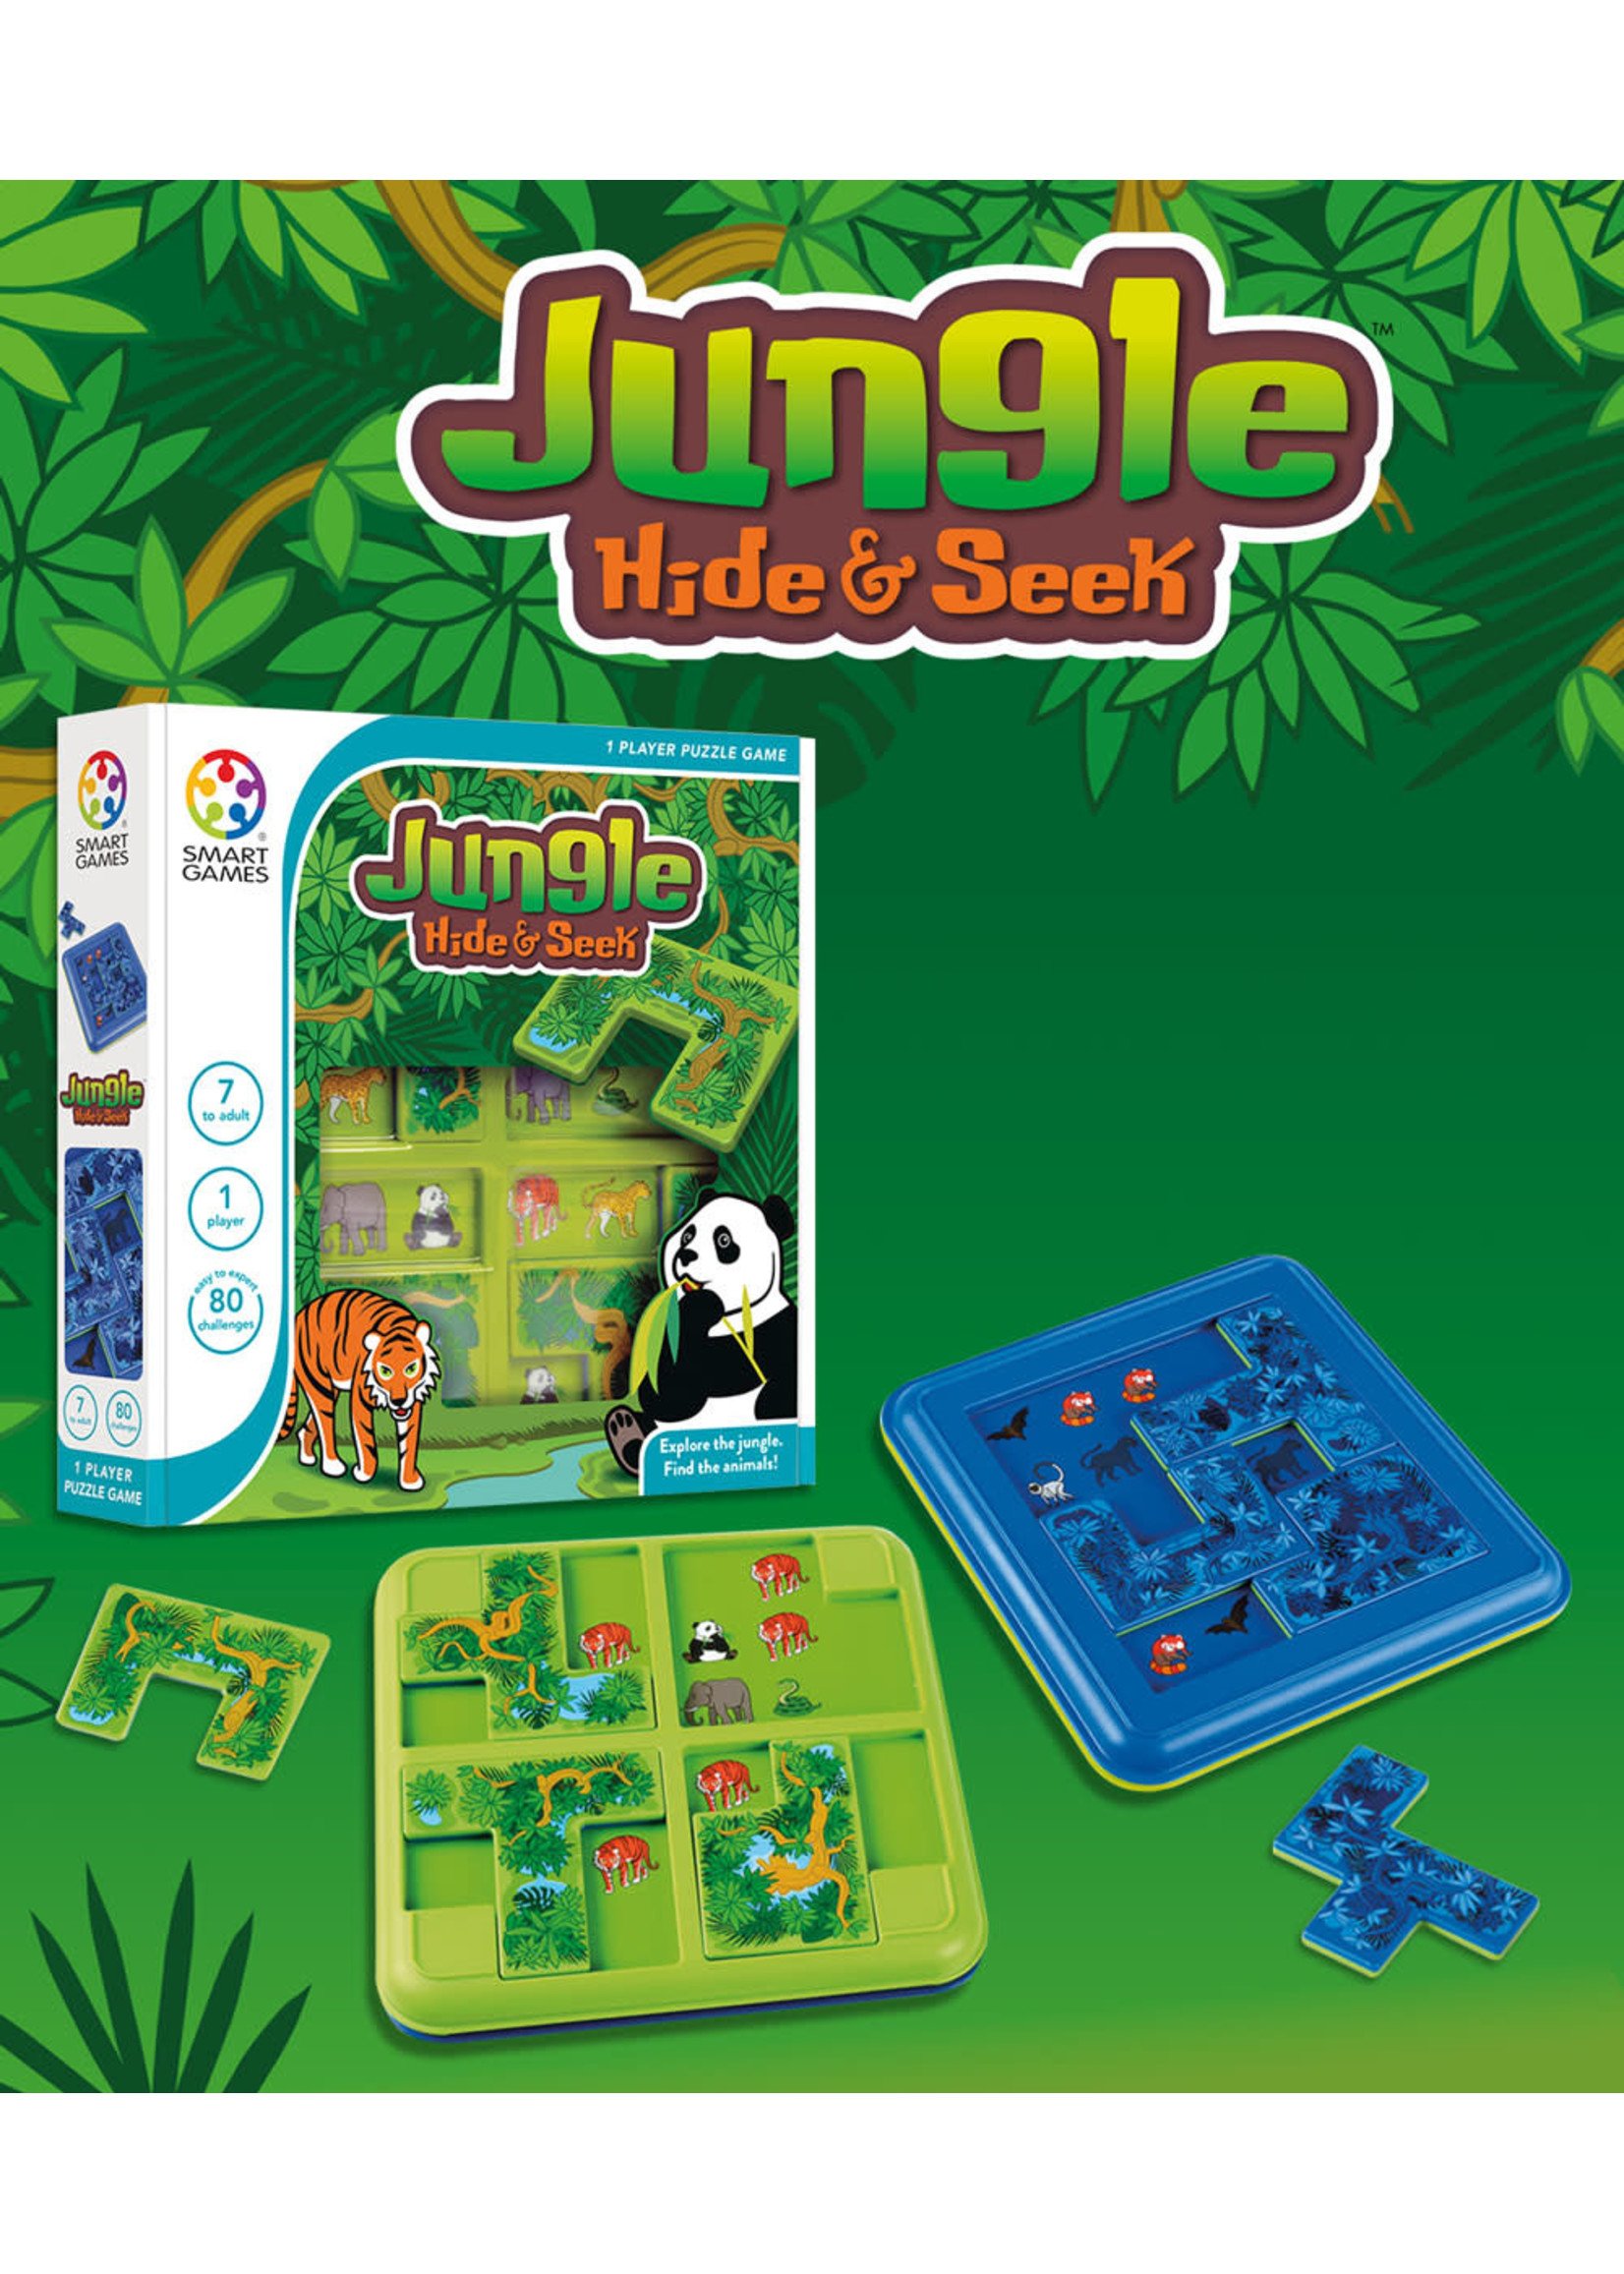 Smart games Jungle hide & seek / Jungle cache cache - Smart games